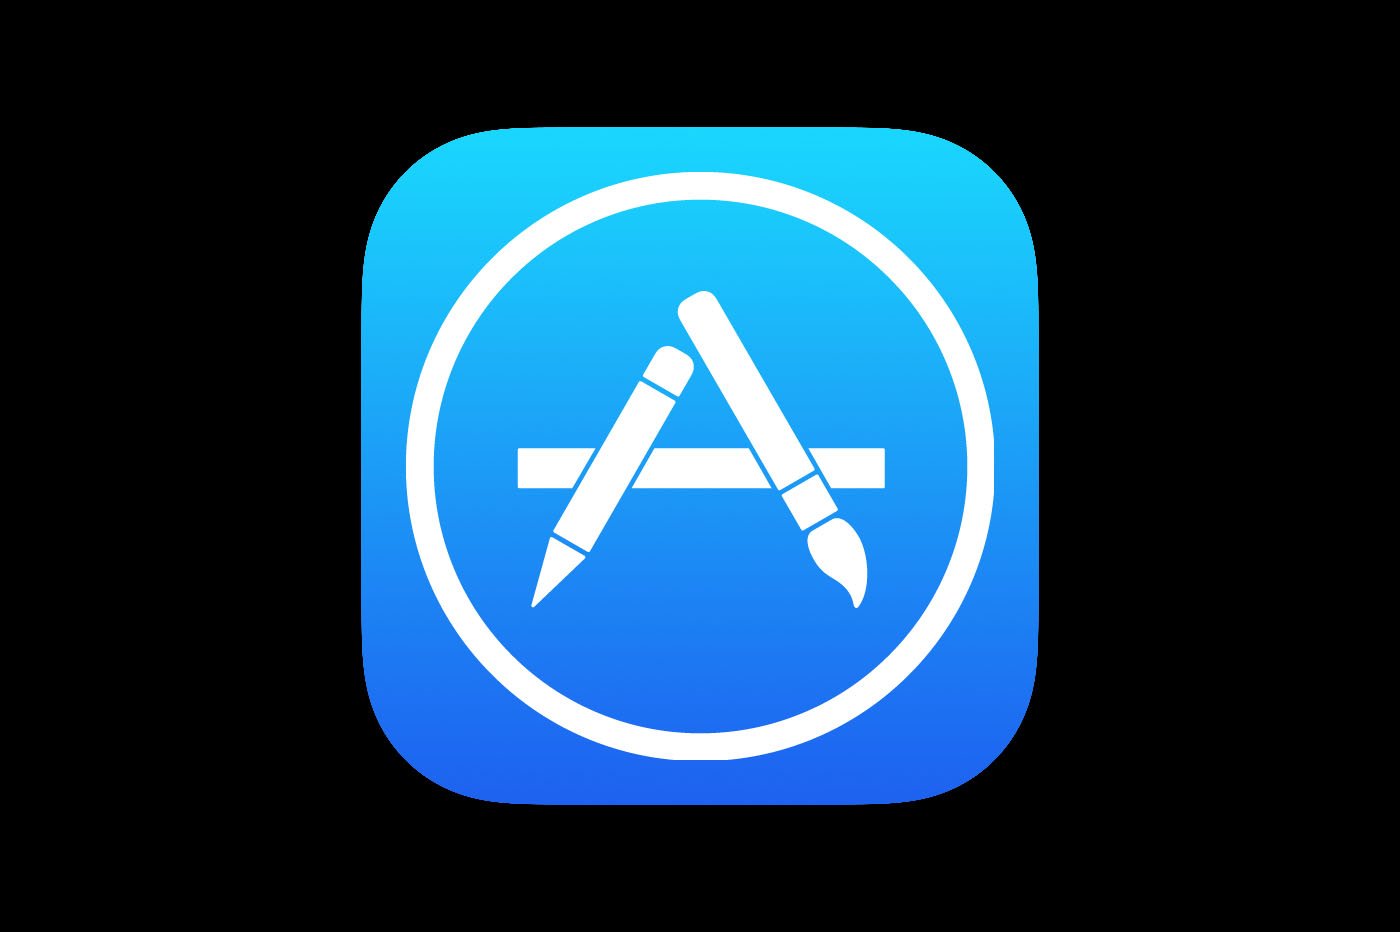 Using app store. APPSTORE. APPSTORE иконка. Значок приложения app Store. Иконка app Store на айфоне.